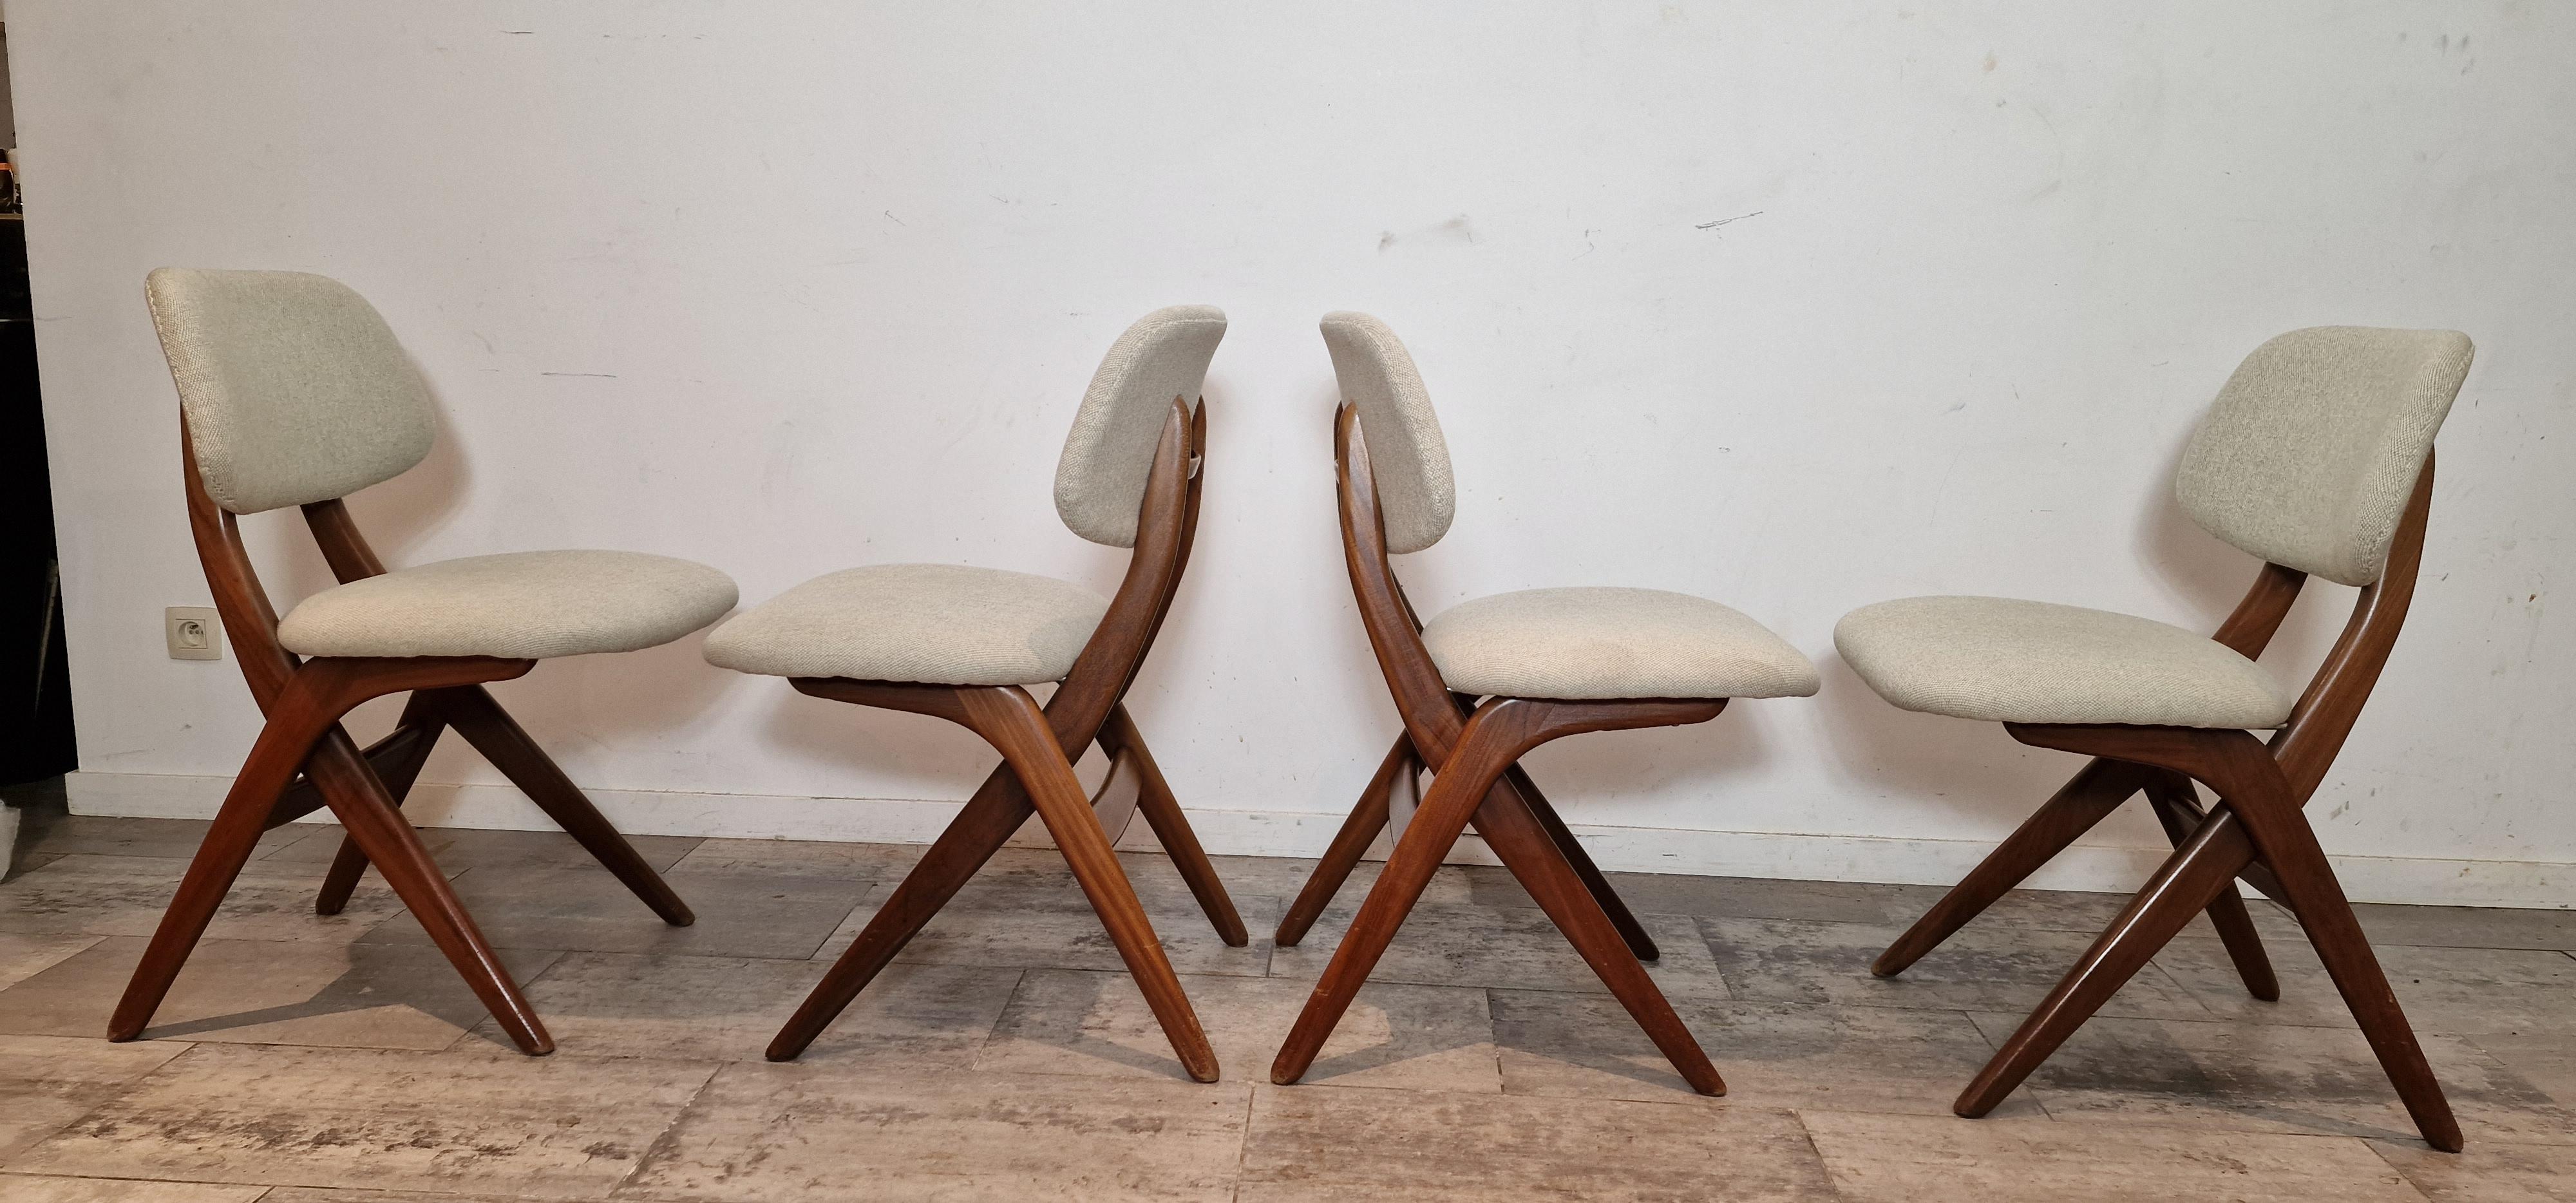 Mid-Century Modern Four Scissor Chairs from Louis Van Teeffelen for Wébé For Sale